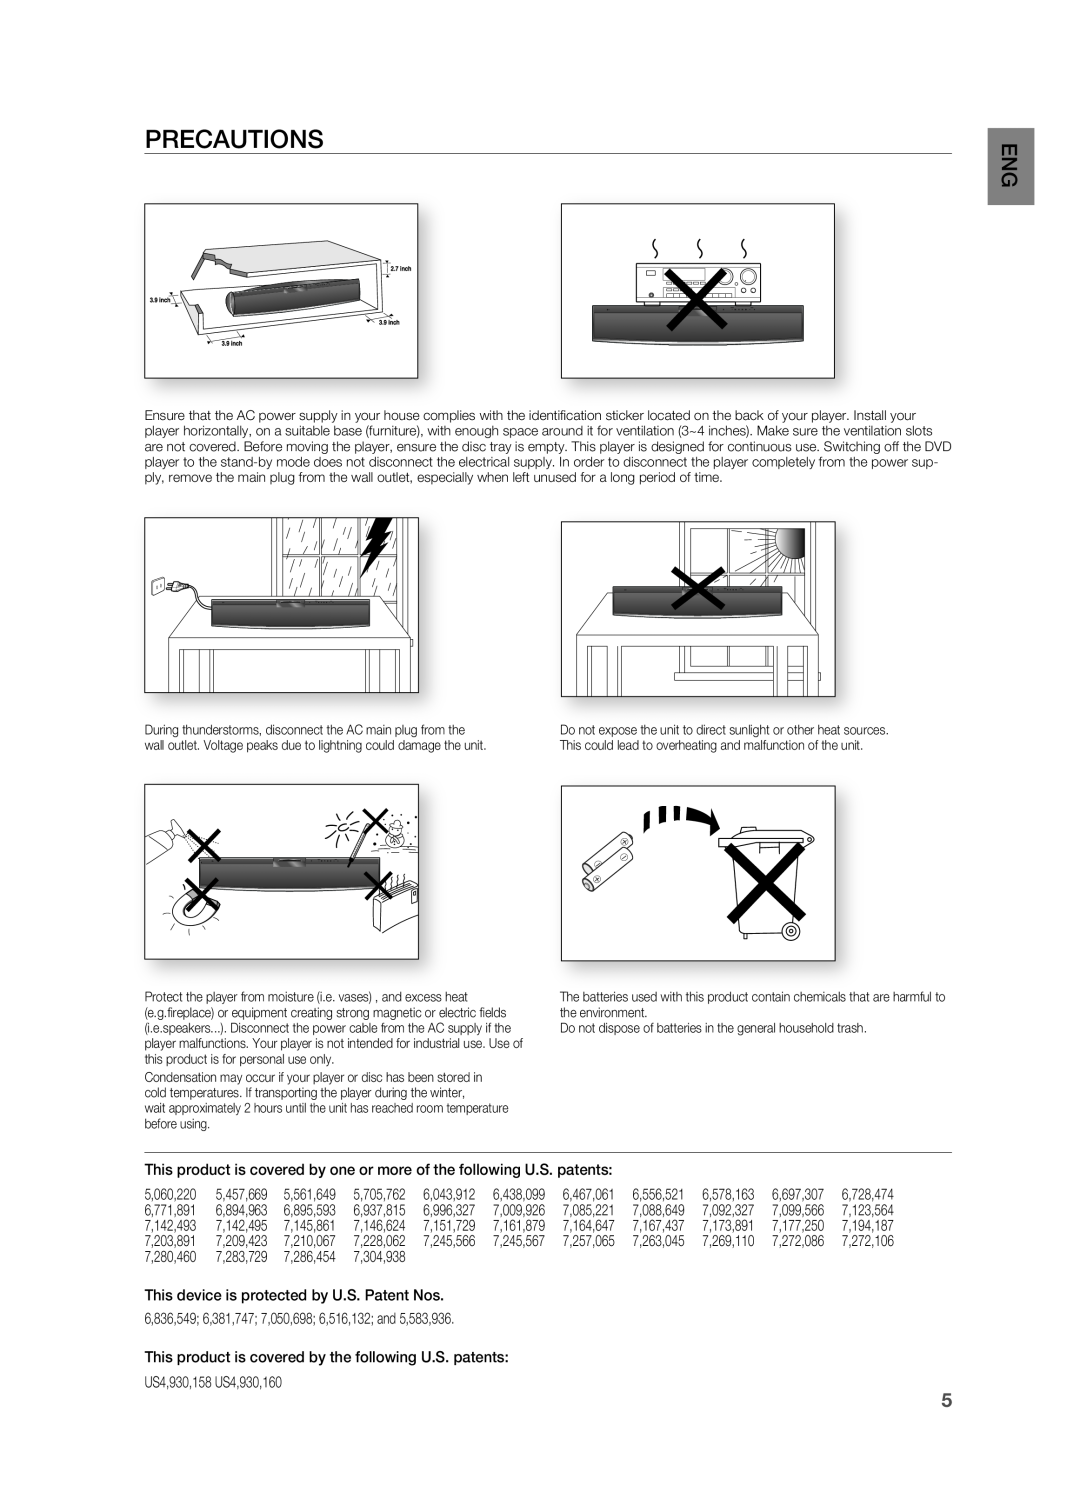 Samsung HT-X810 user manual PrECAUTIONS 